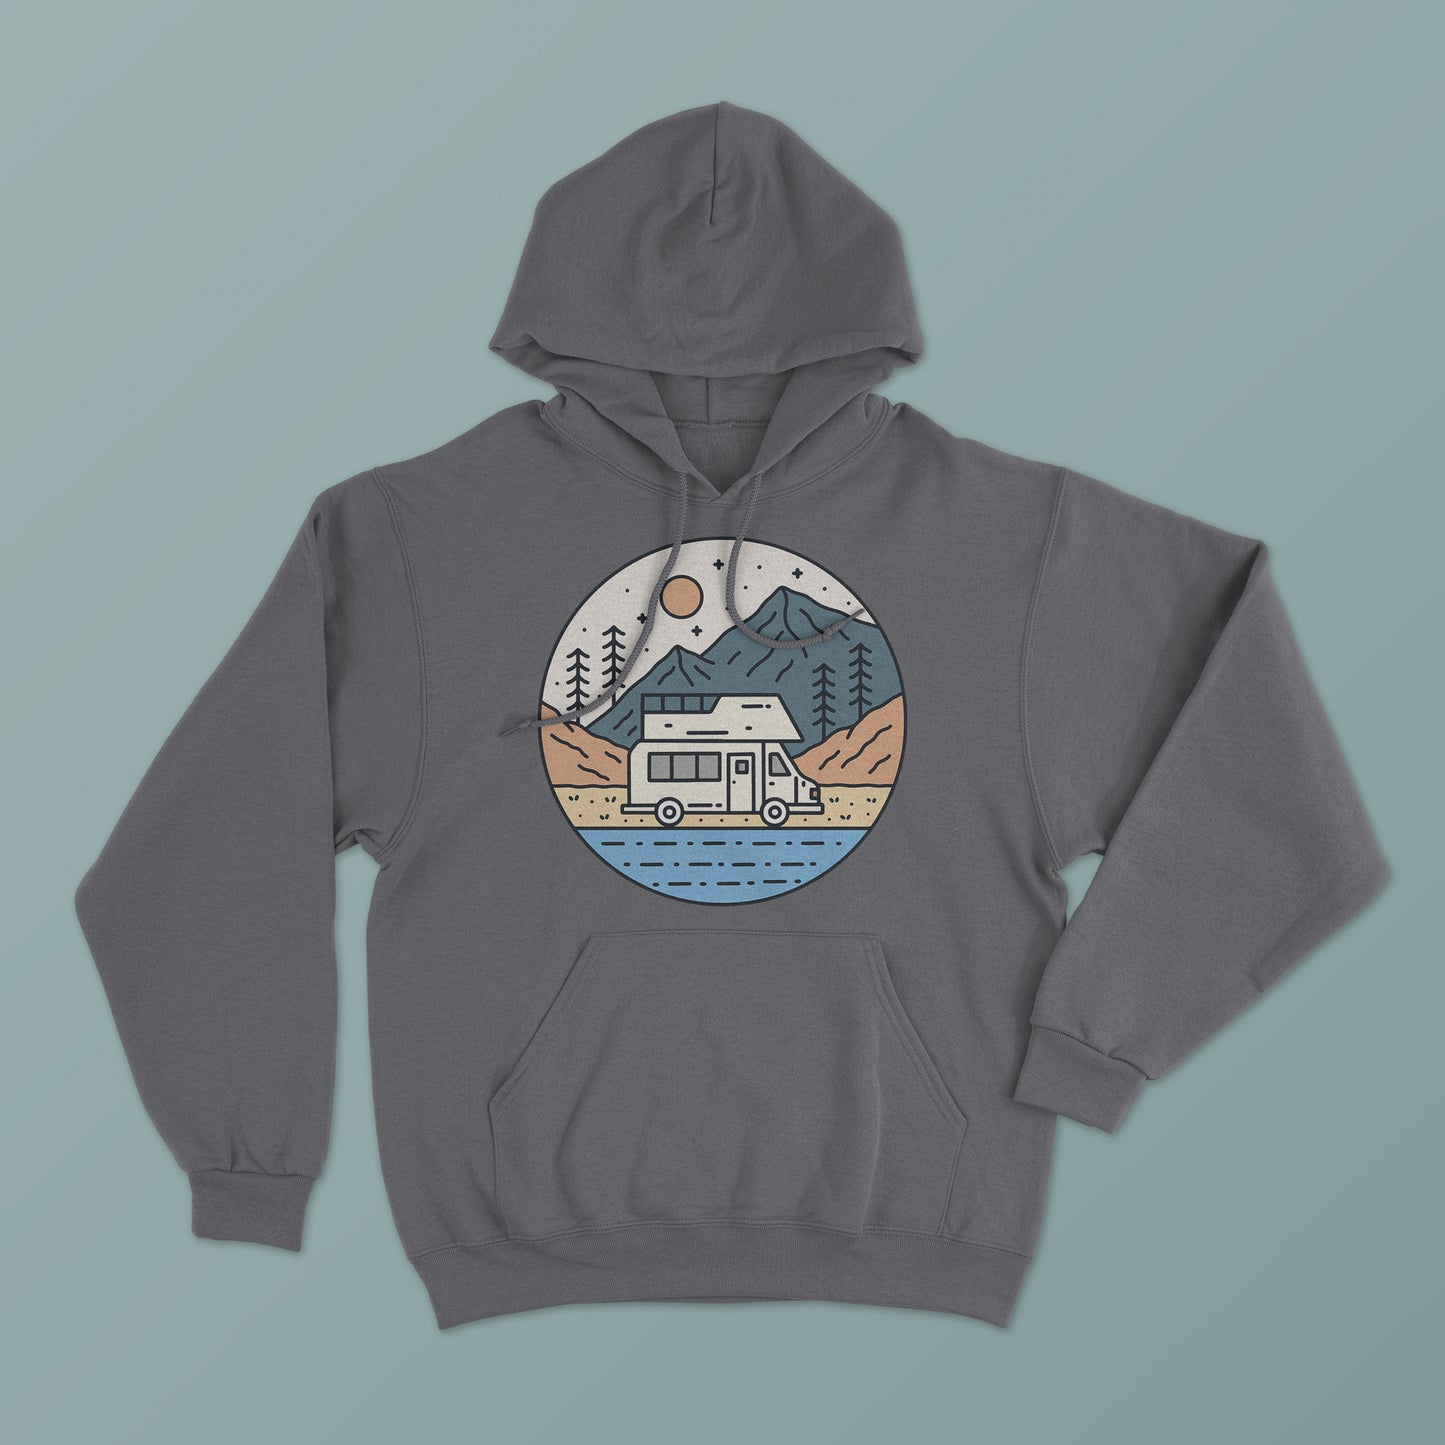 Minimalistic Camping Trailer Print Hoodie - Stylish Hoodie with Adventure Vibes, Men's, Women's Unisex Hooded Sweatshirt, Outdoor Style